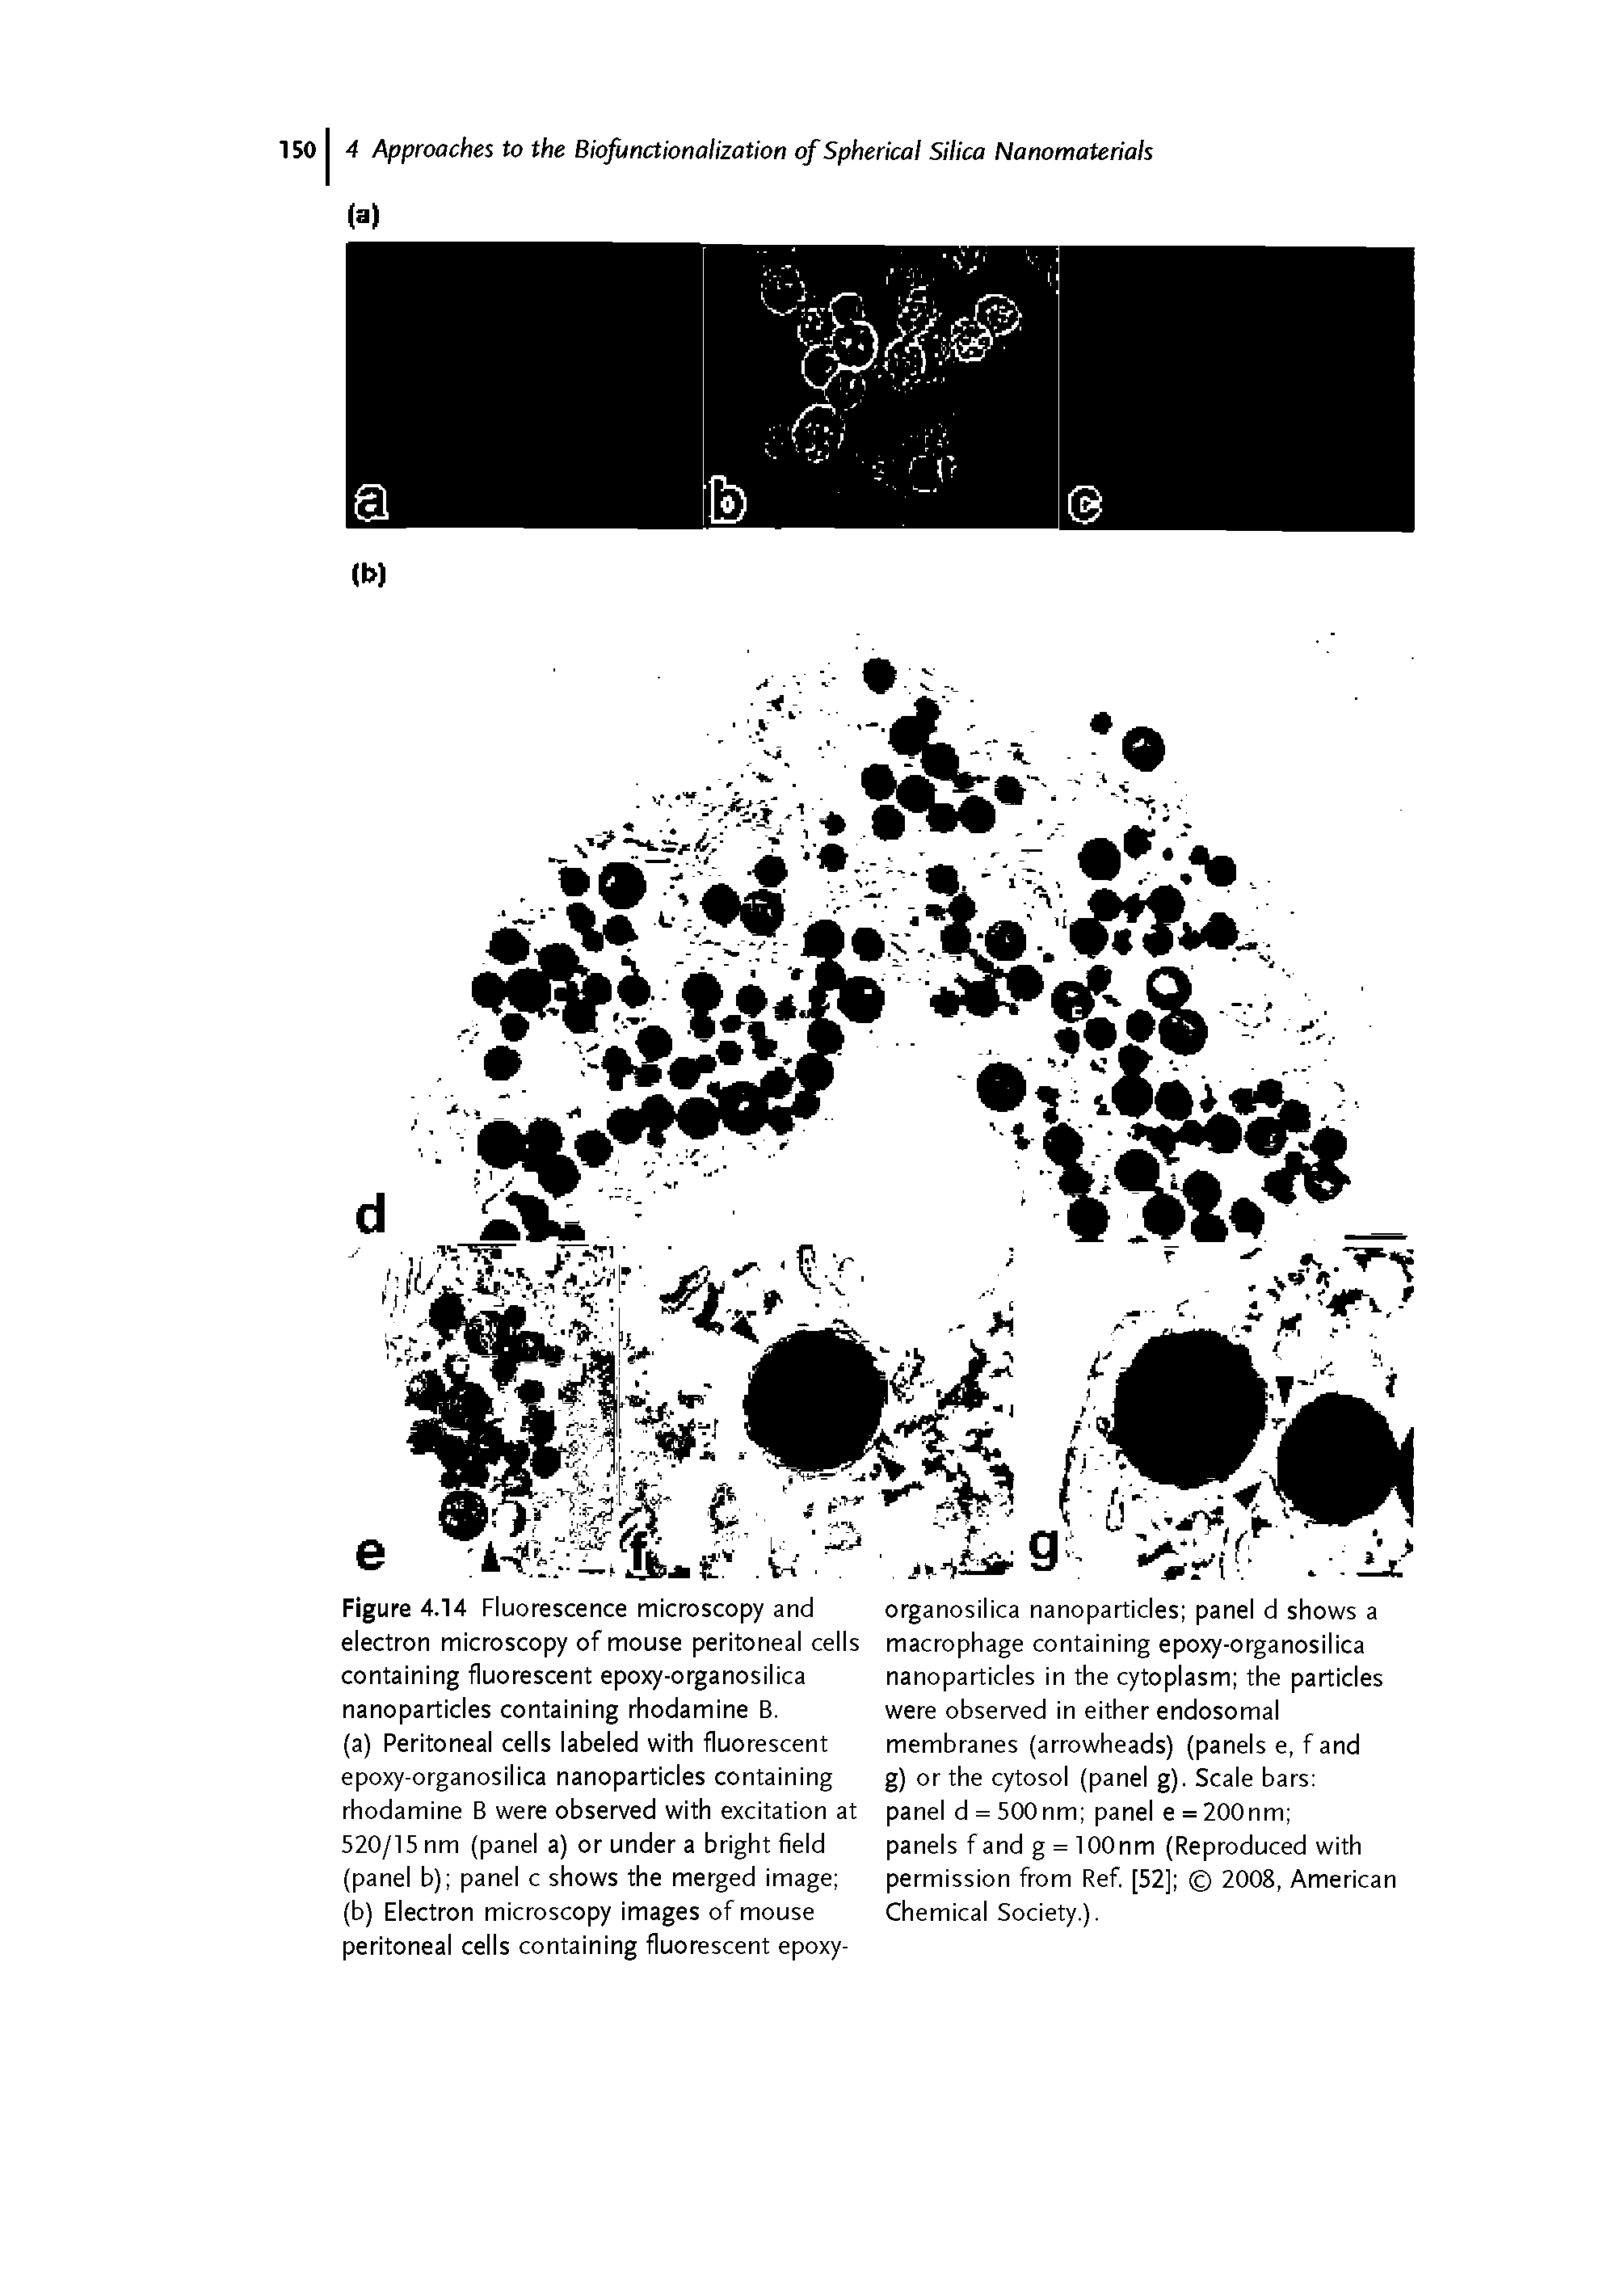 Figure 4.14 Fluorescence microscopy and electron microscopy of mouse peritoneal cells containing fluorescent epoxy-organosilica nanoparticles containing rhodamine B.